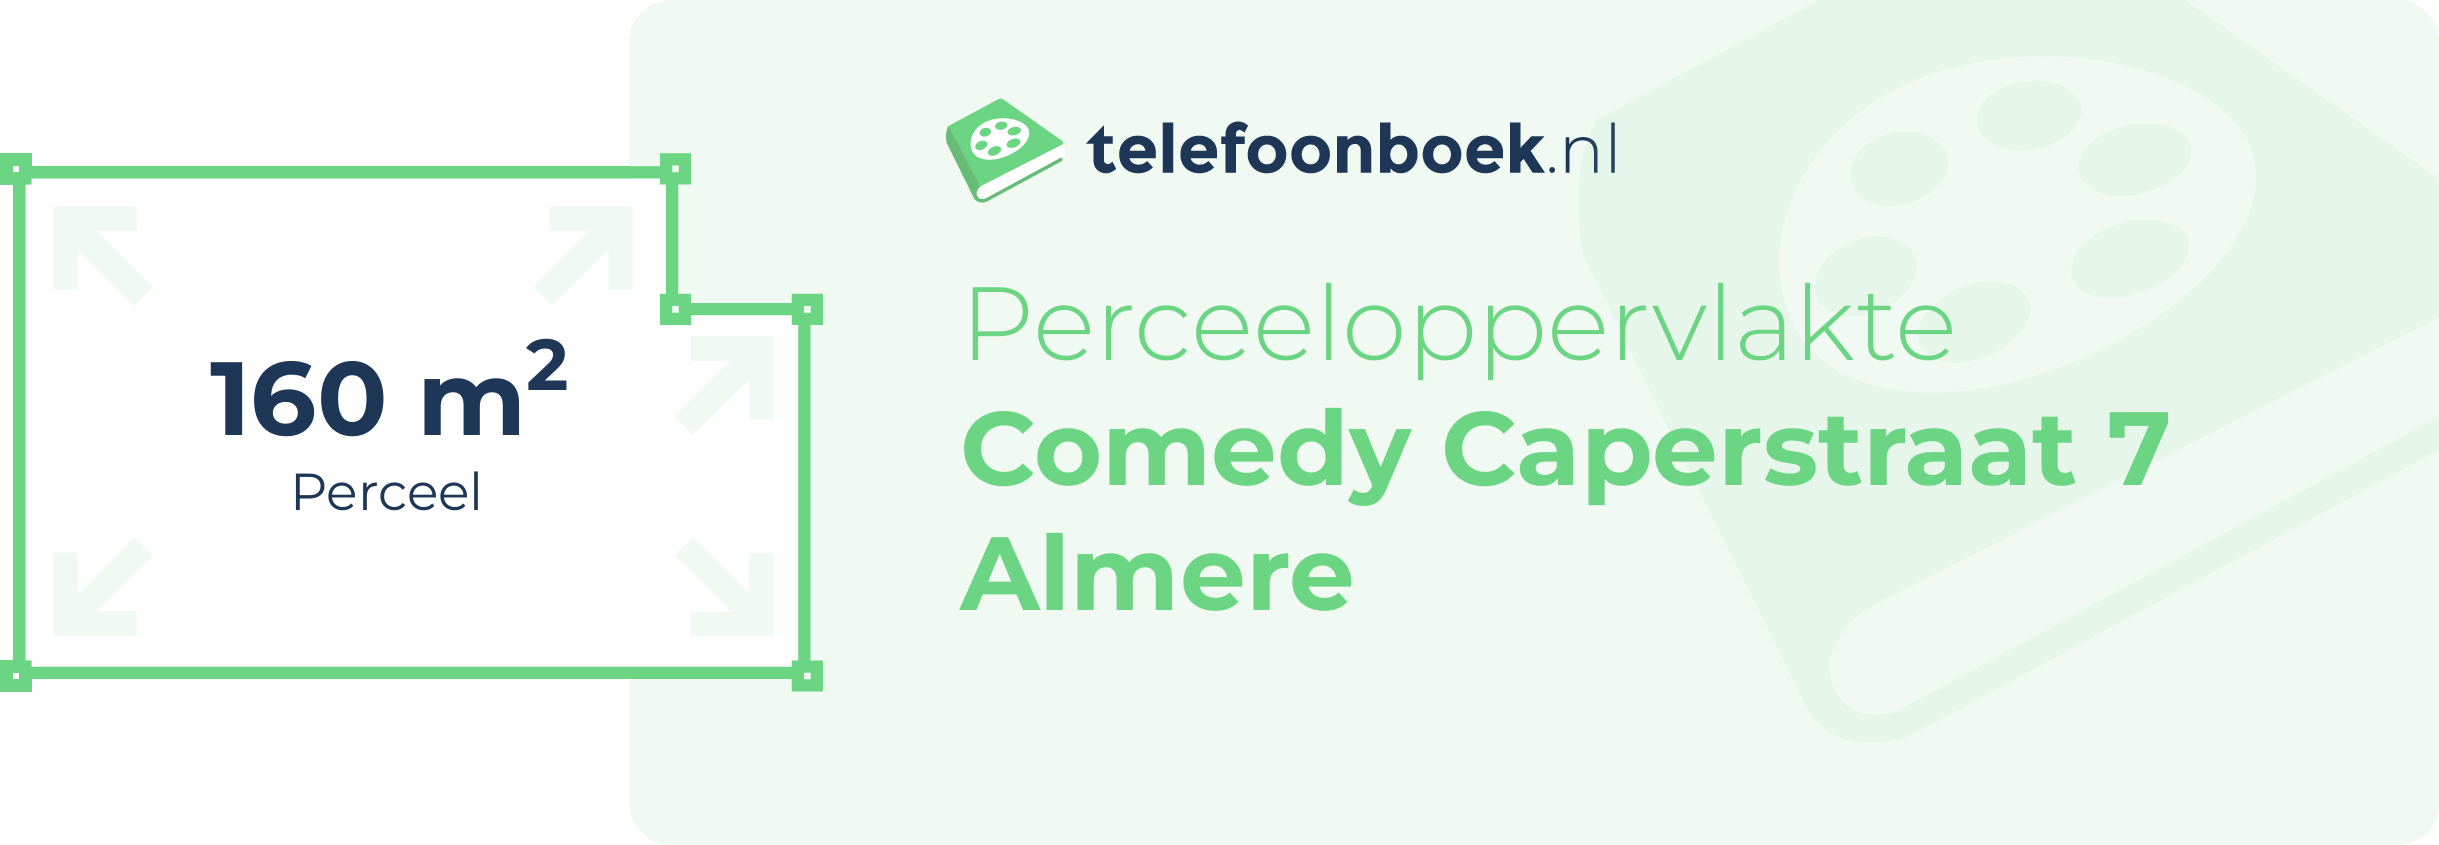 Perceeloppervlakte Comedy Caperstraat 7 Almere